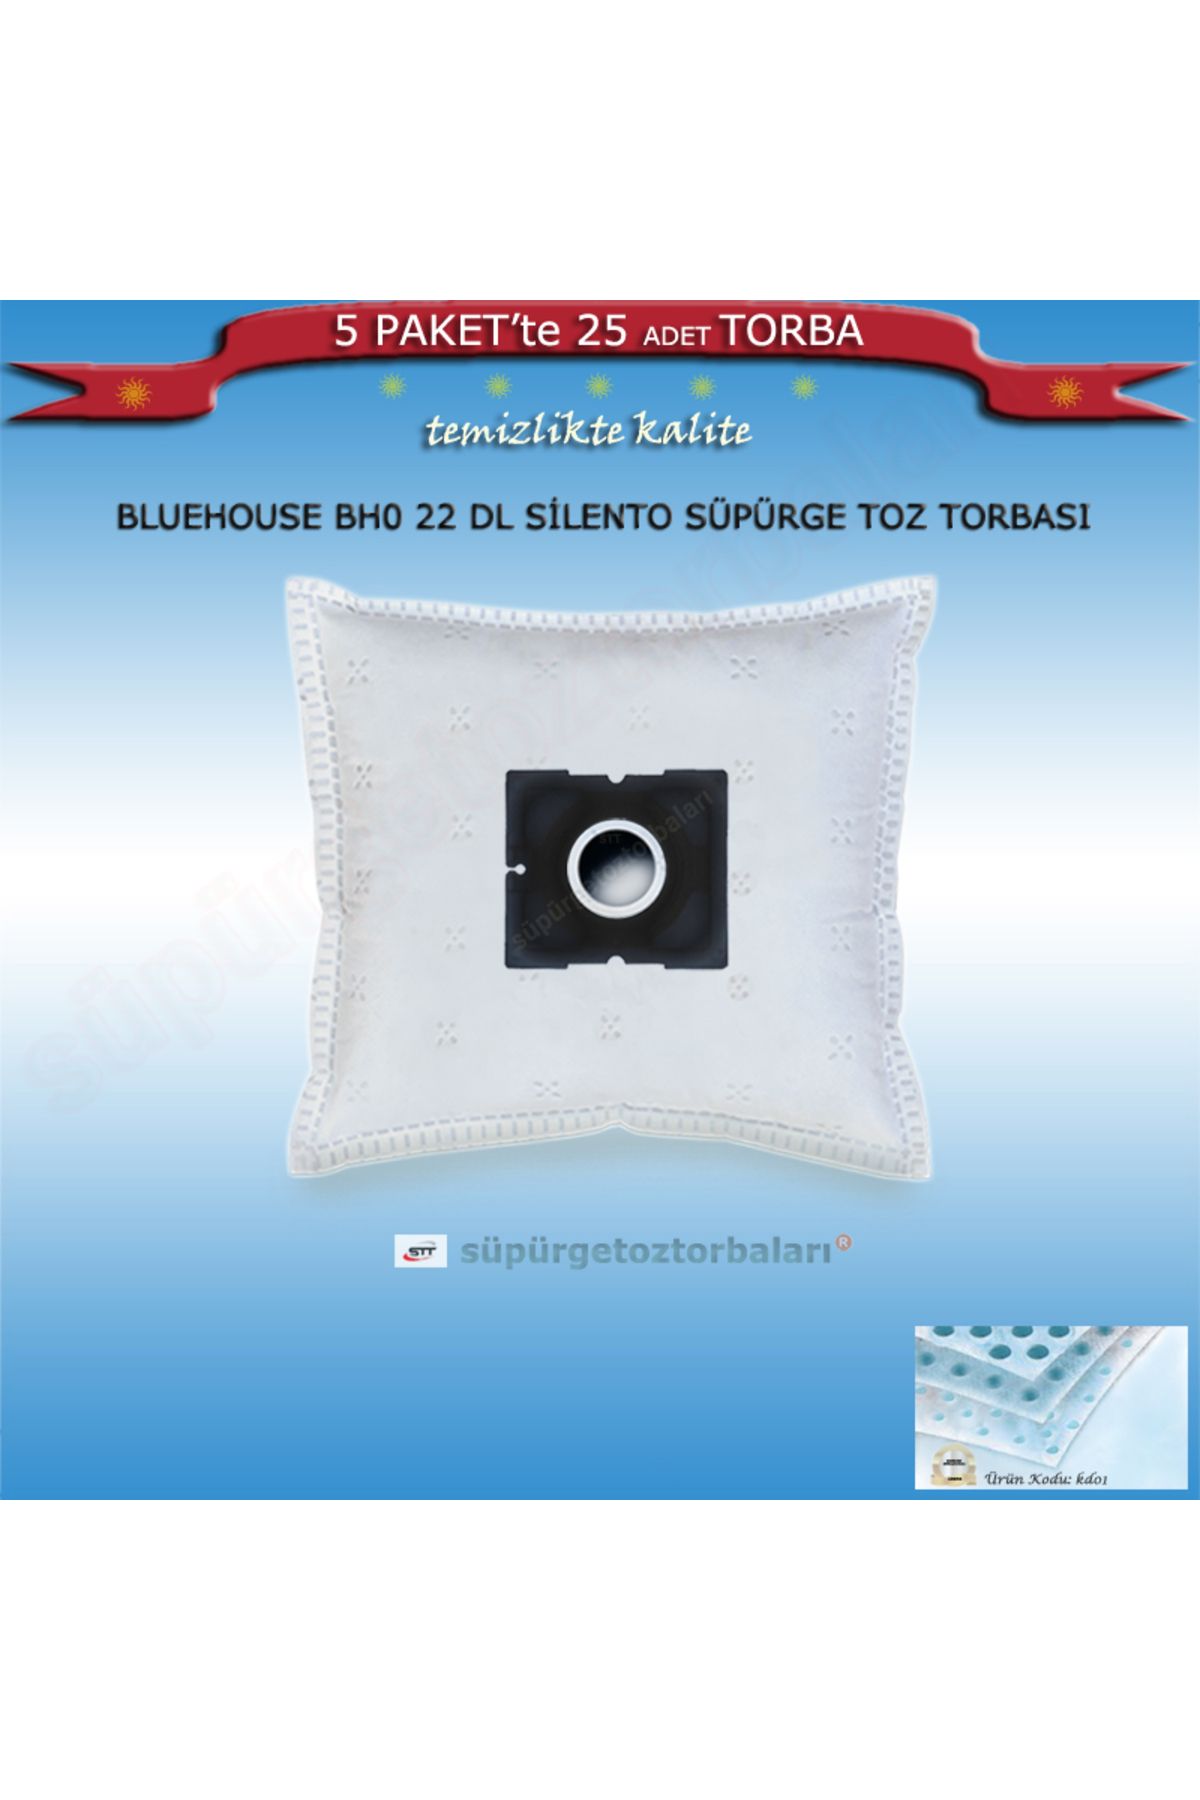 BLUE HOUSE Bluehouse Bh0 22 Dl Silento Süpürge Toz Torbası 25 Adet Torba Kd01